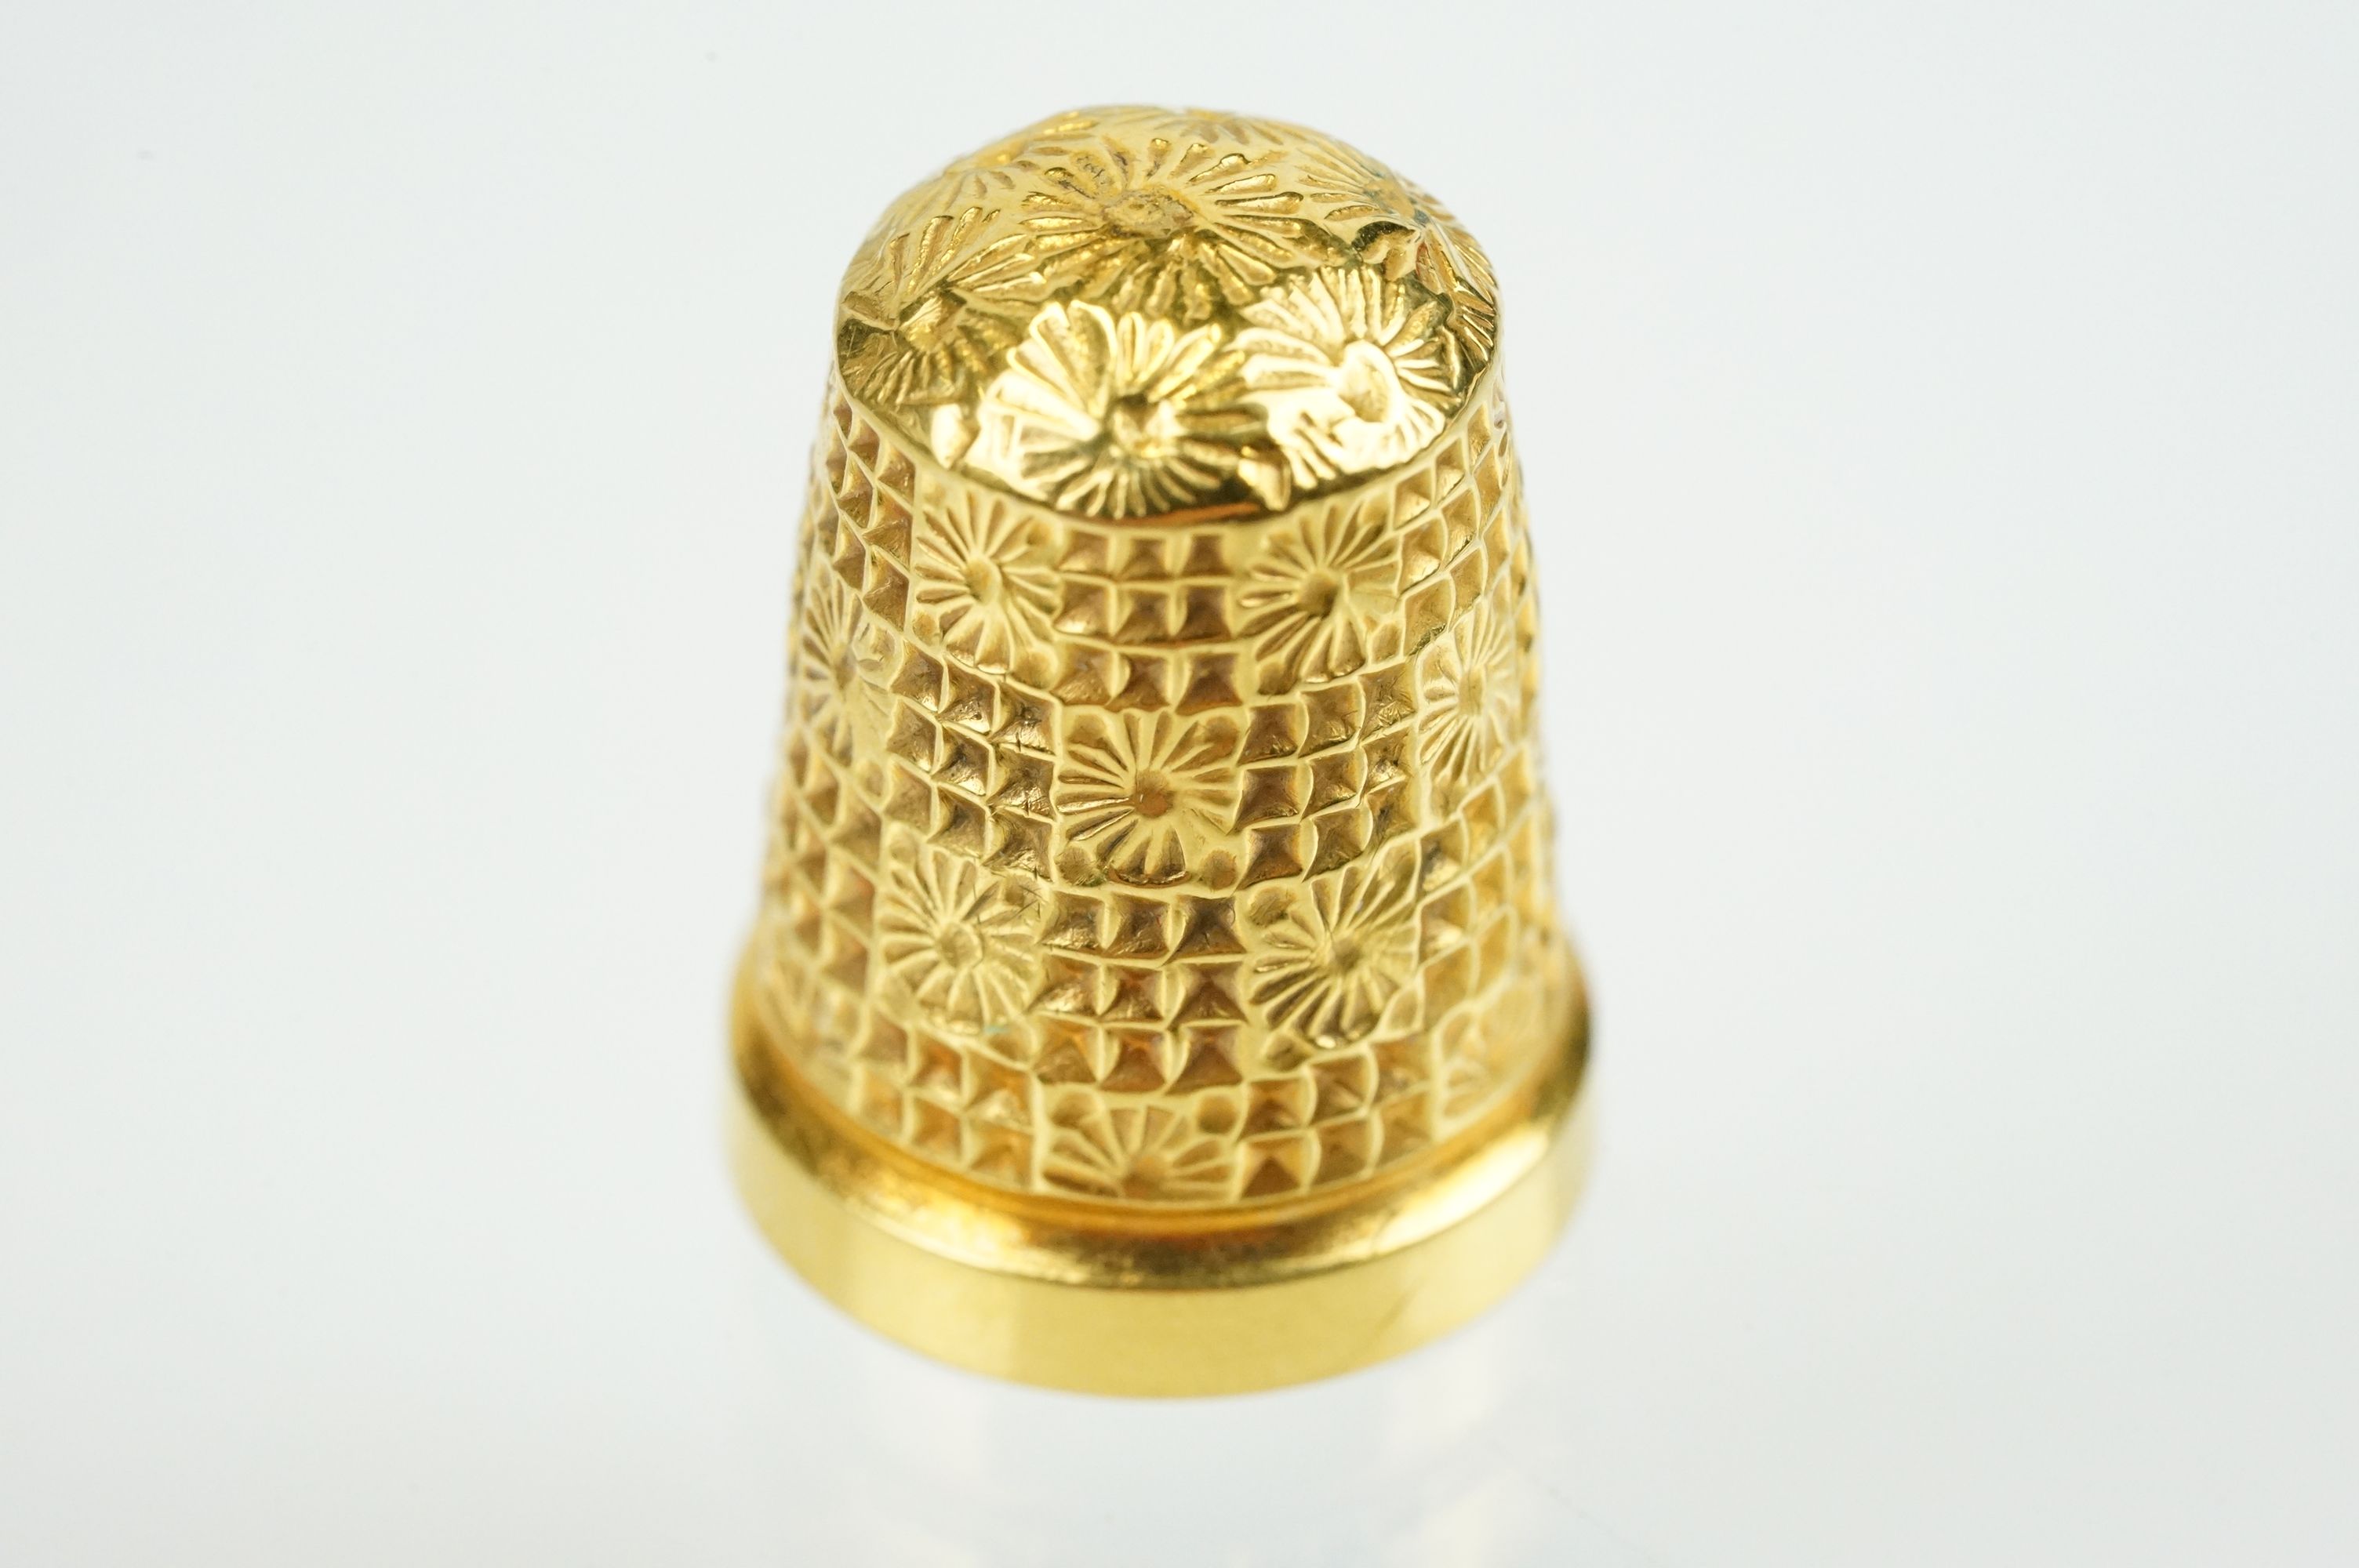 9ct gold hallmarked thimble with moulded details, size 15. Hallmarked Birmingham 1902, HG & S Ltd.